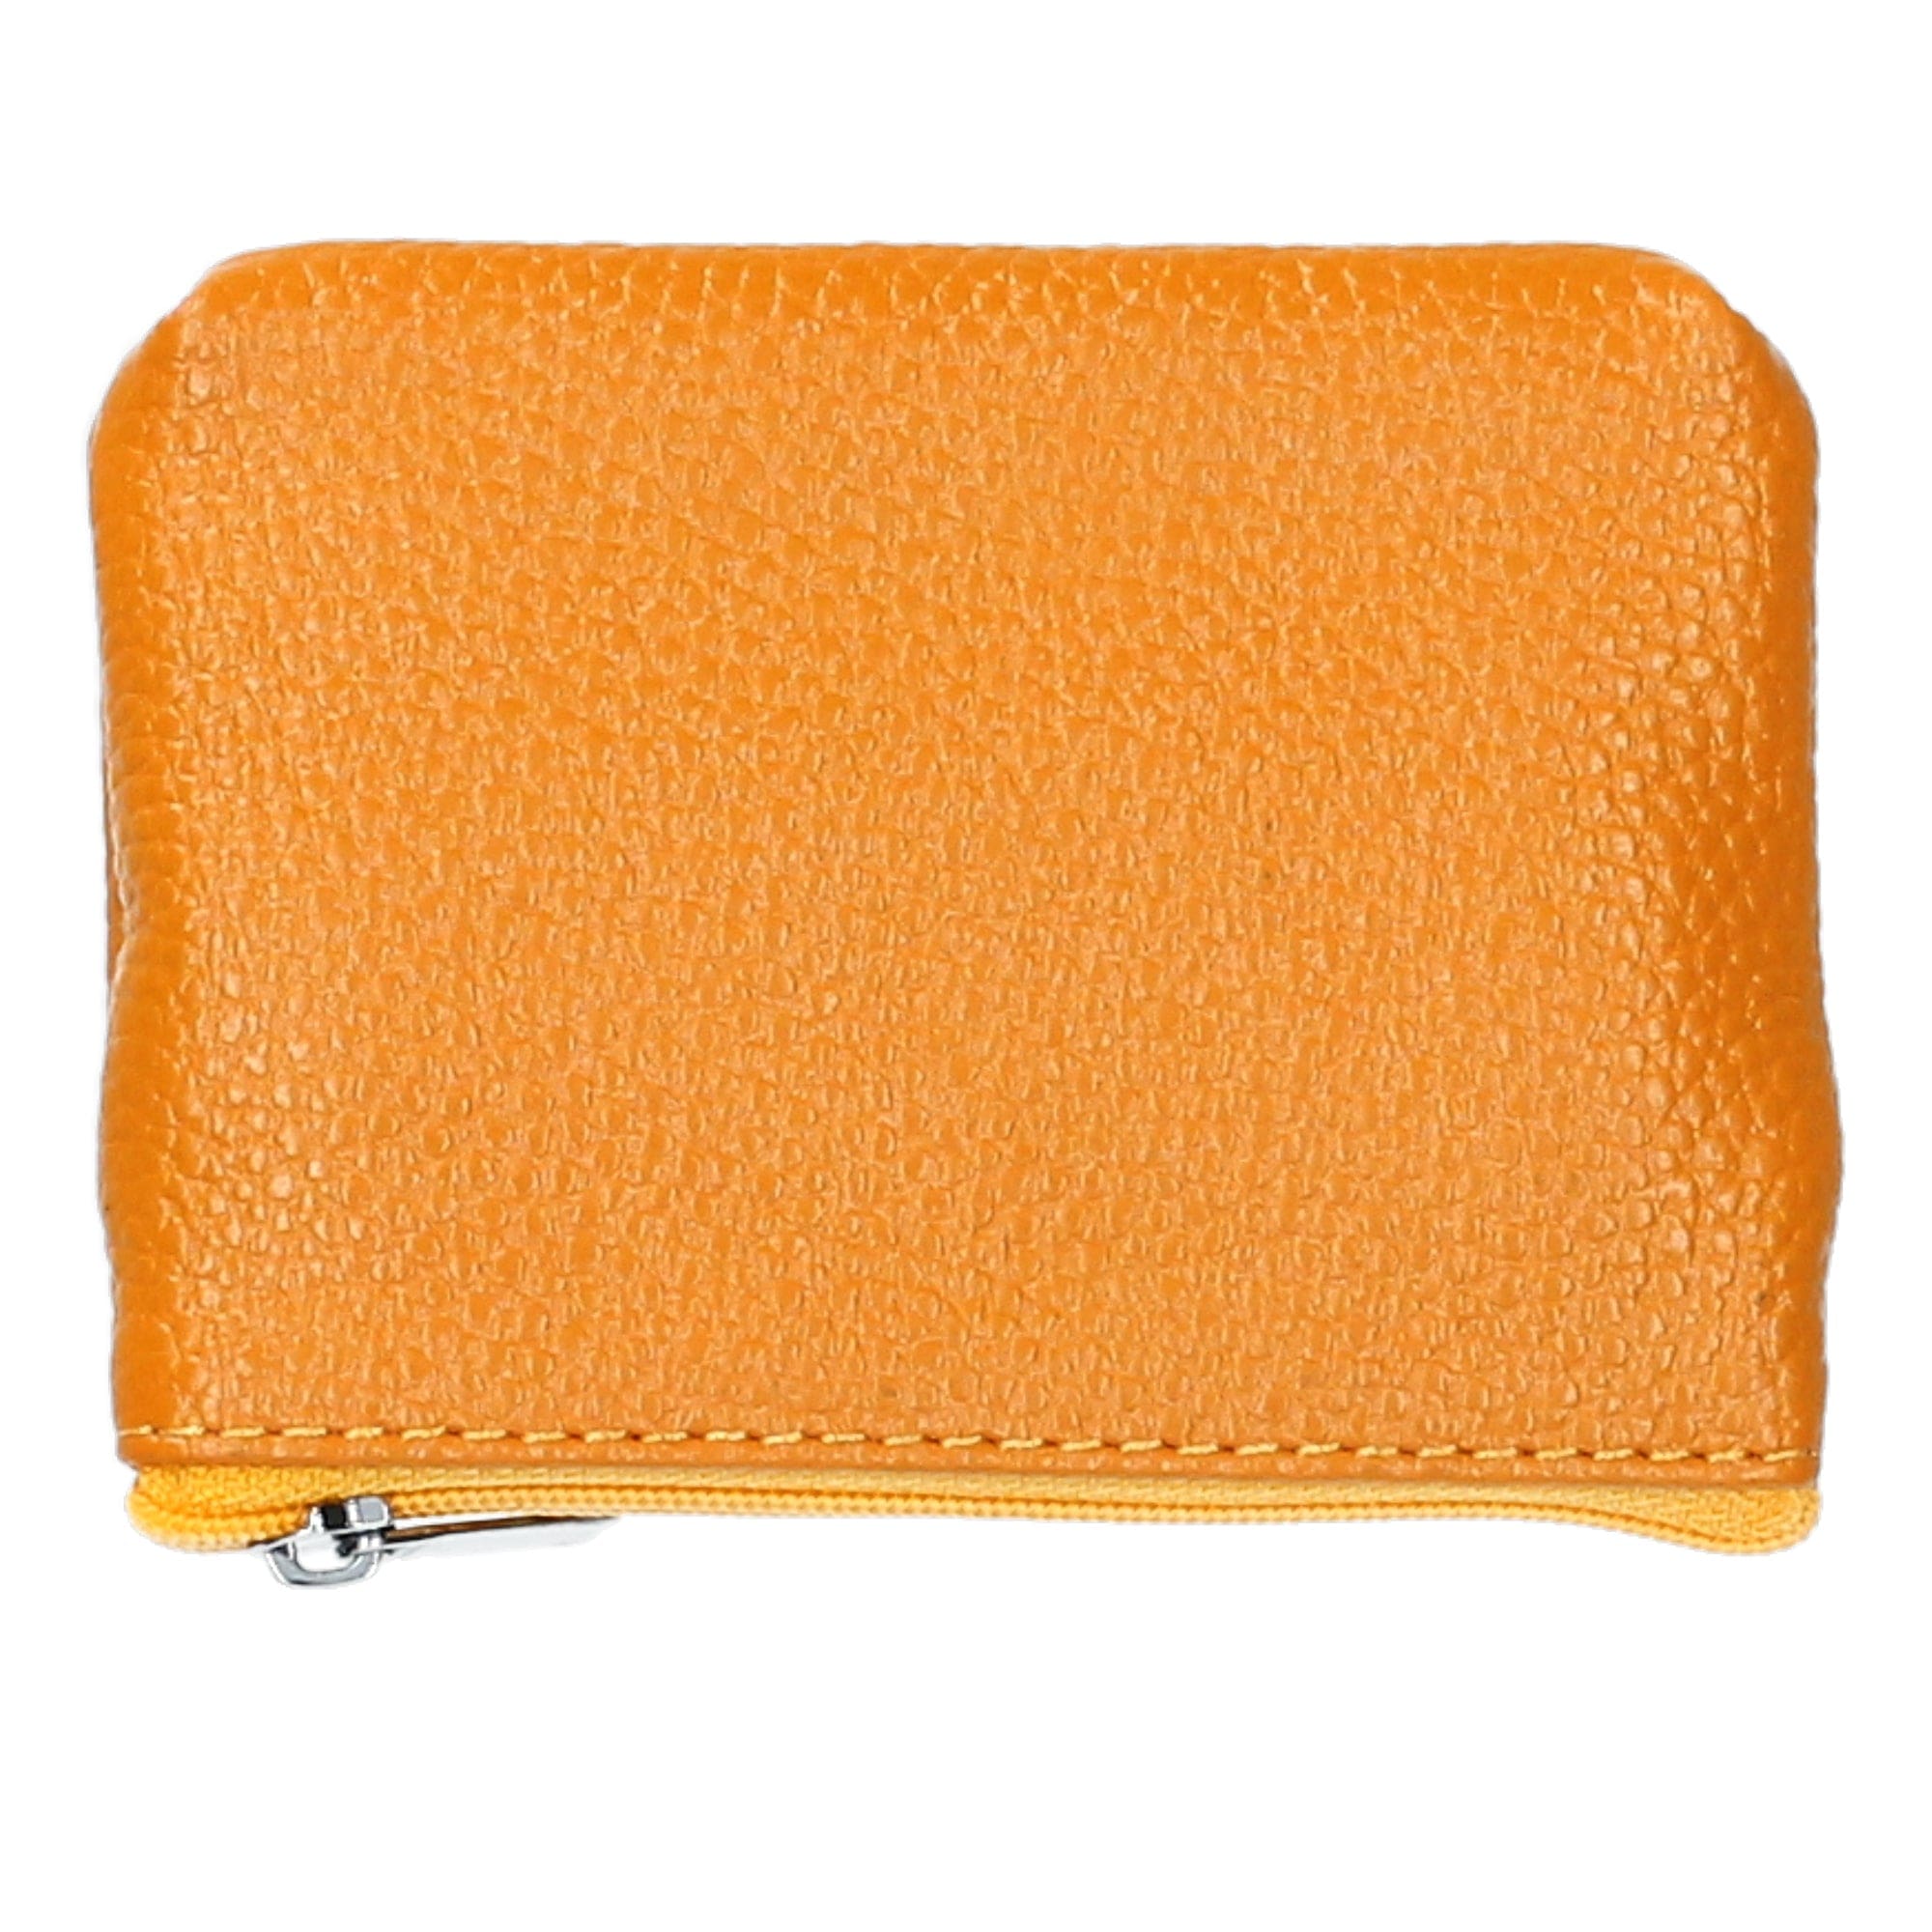 Arlette wallet - Orange - Small leather goods